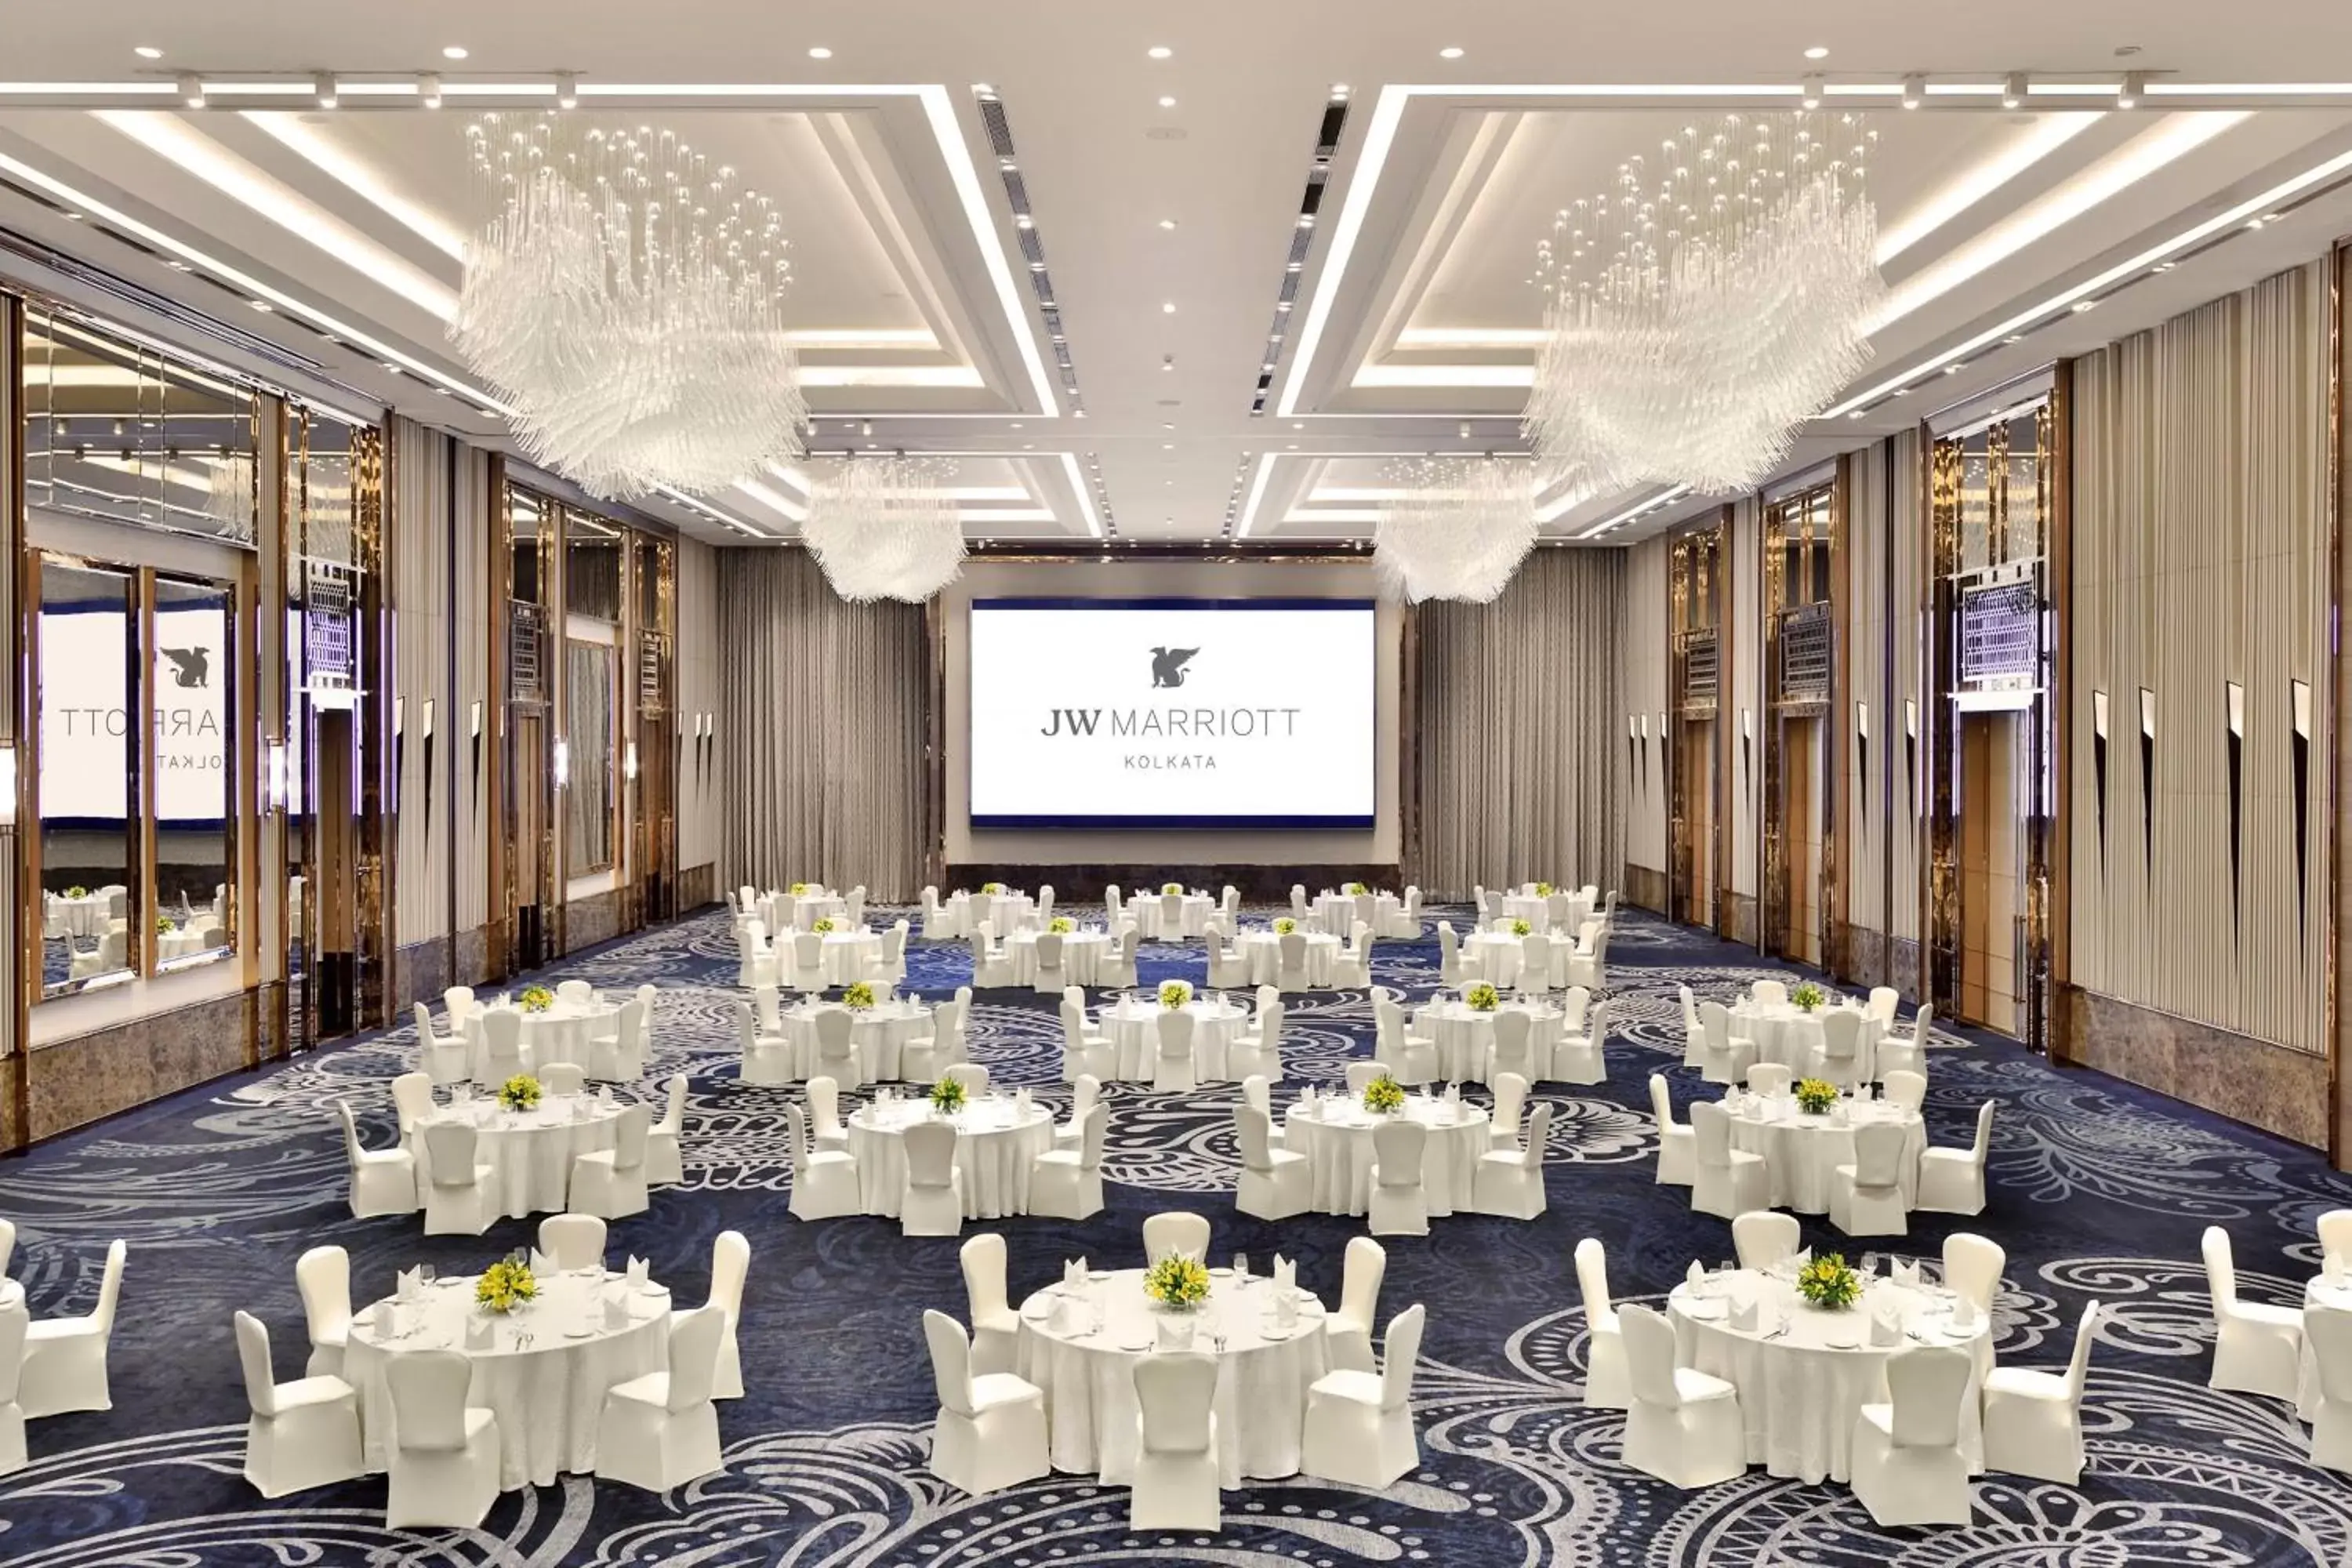 Meeting/conference room, Banquet Facilities in JW Marriott Hotel Kolkata